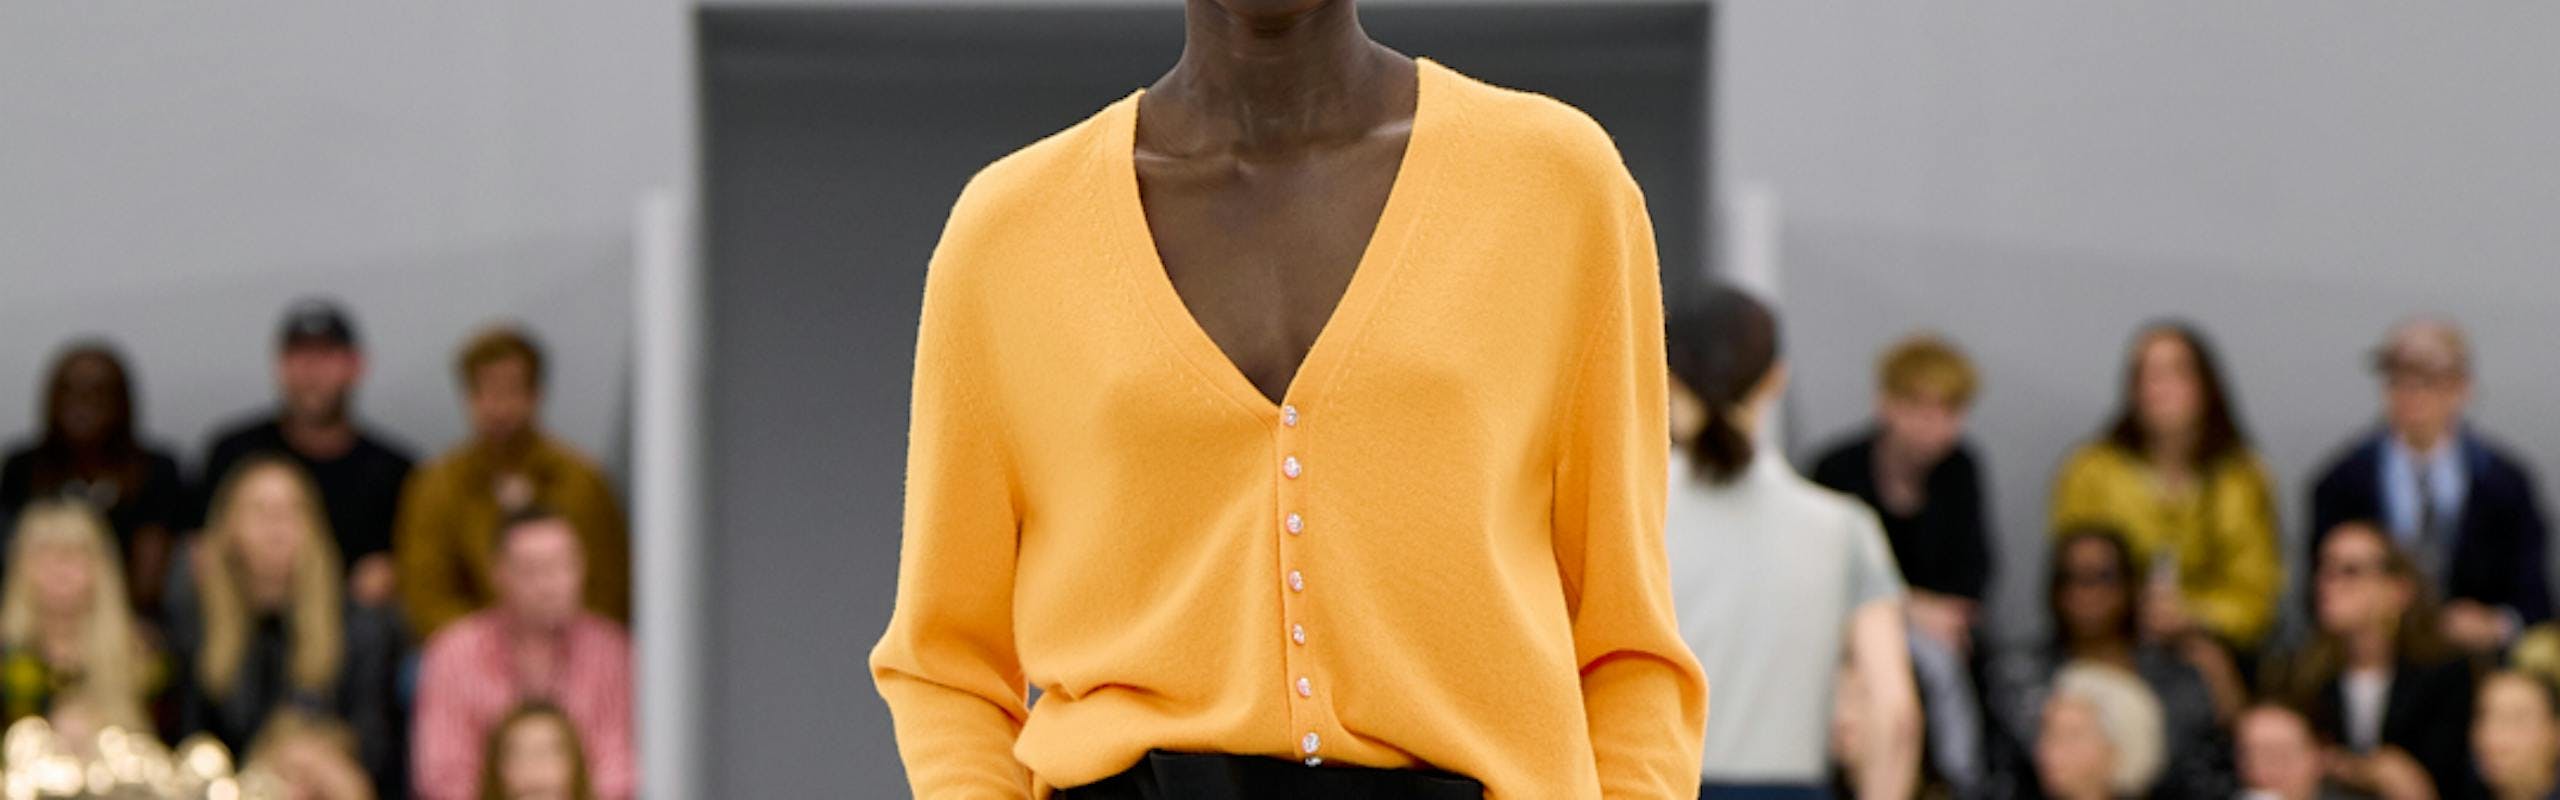 model in orange top and black shorts